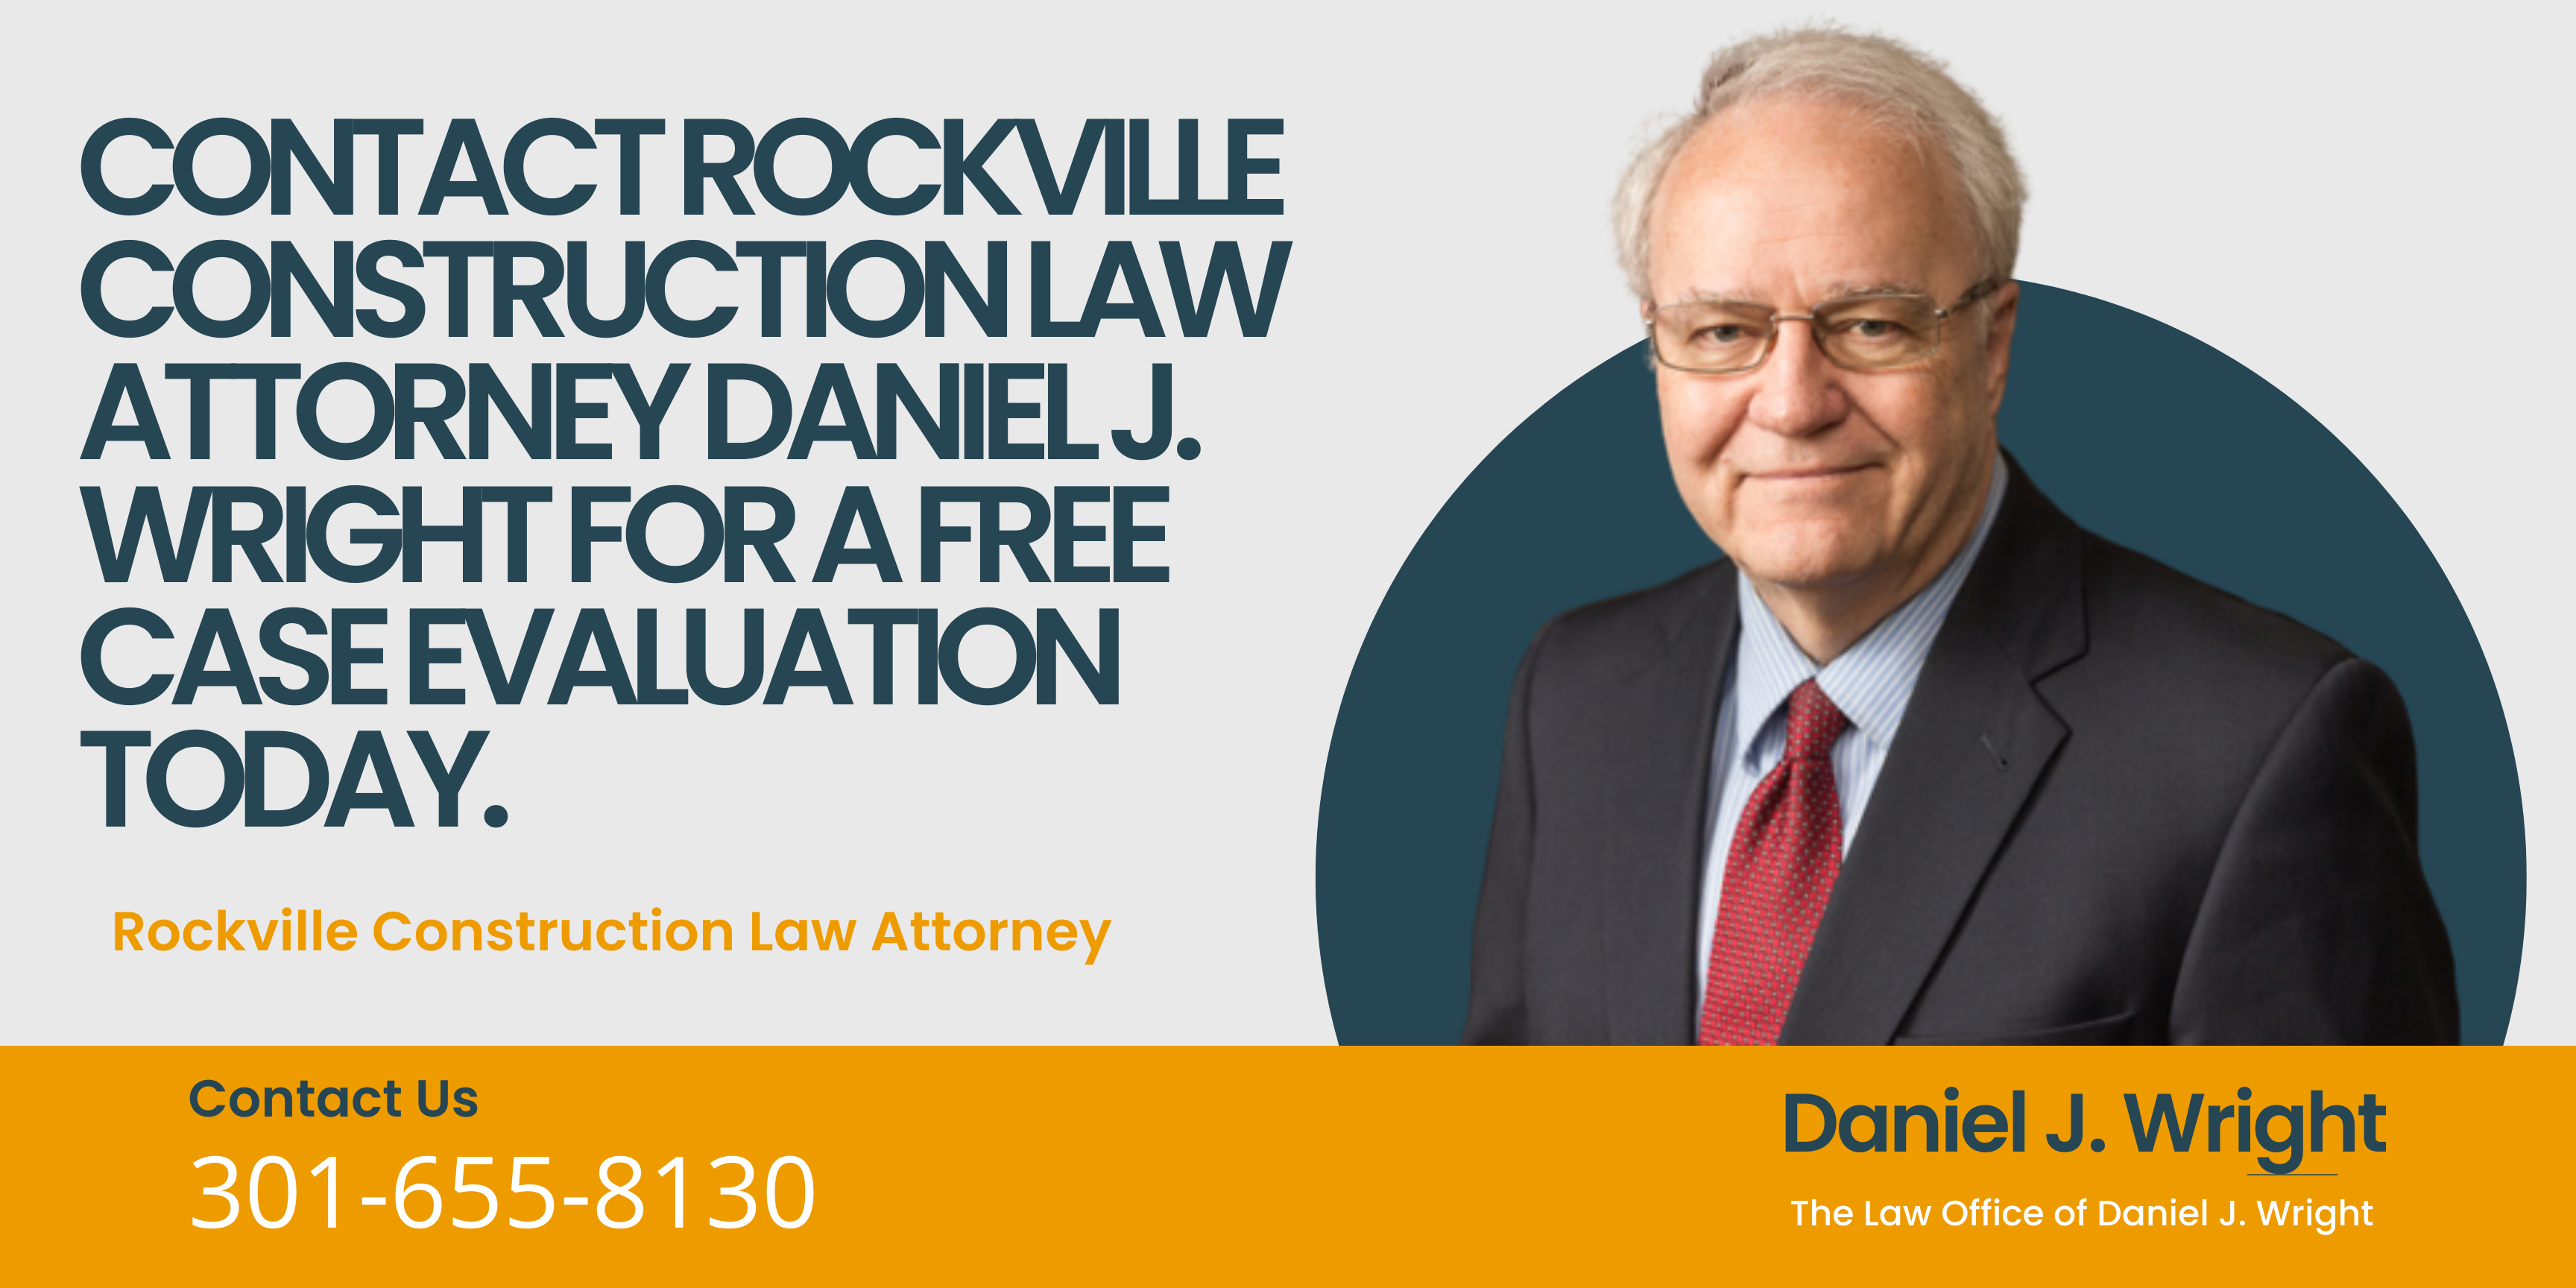 Contact Rockville Construction Law Attorney Daniel J. Wright